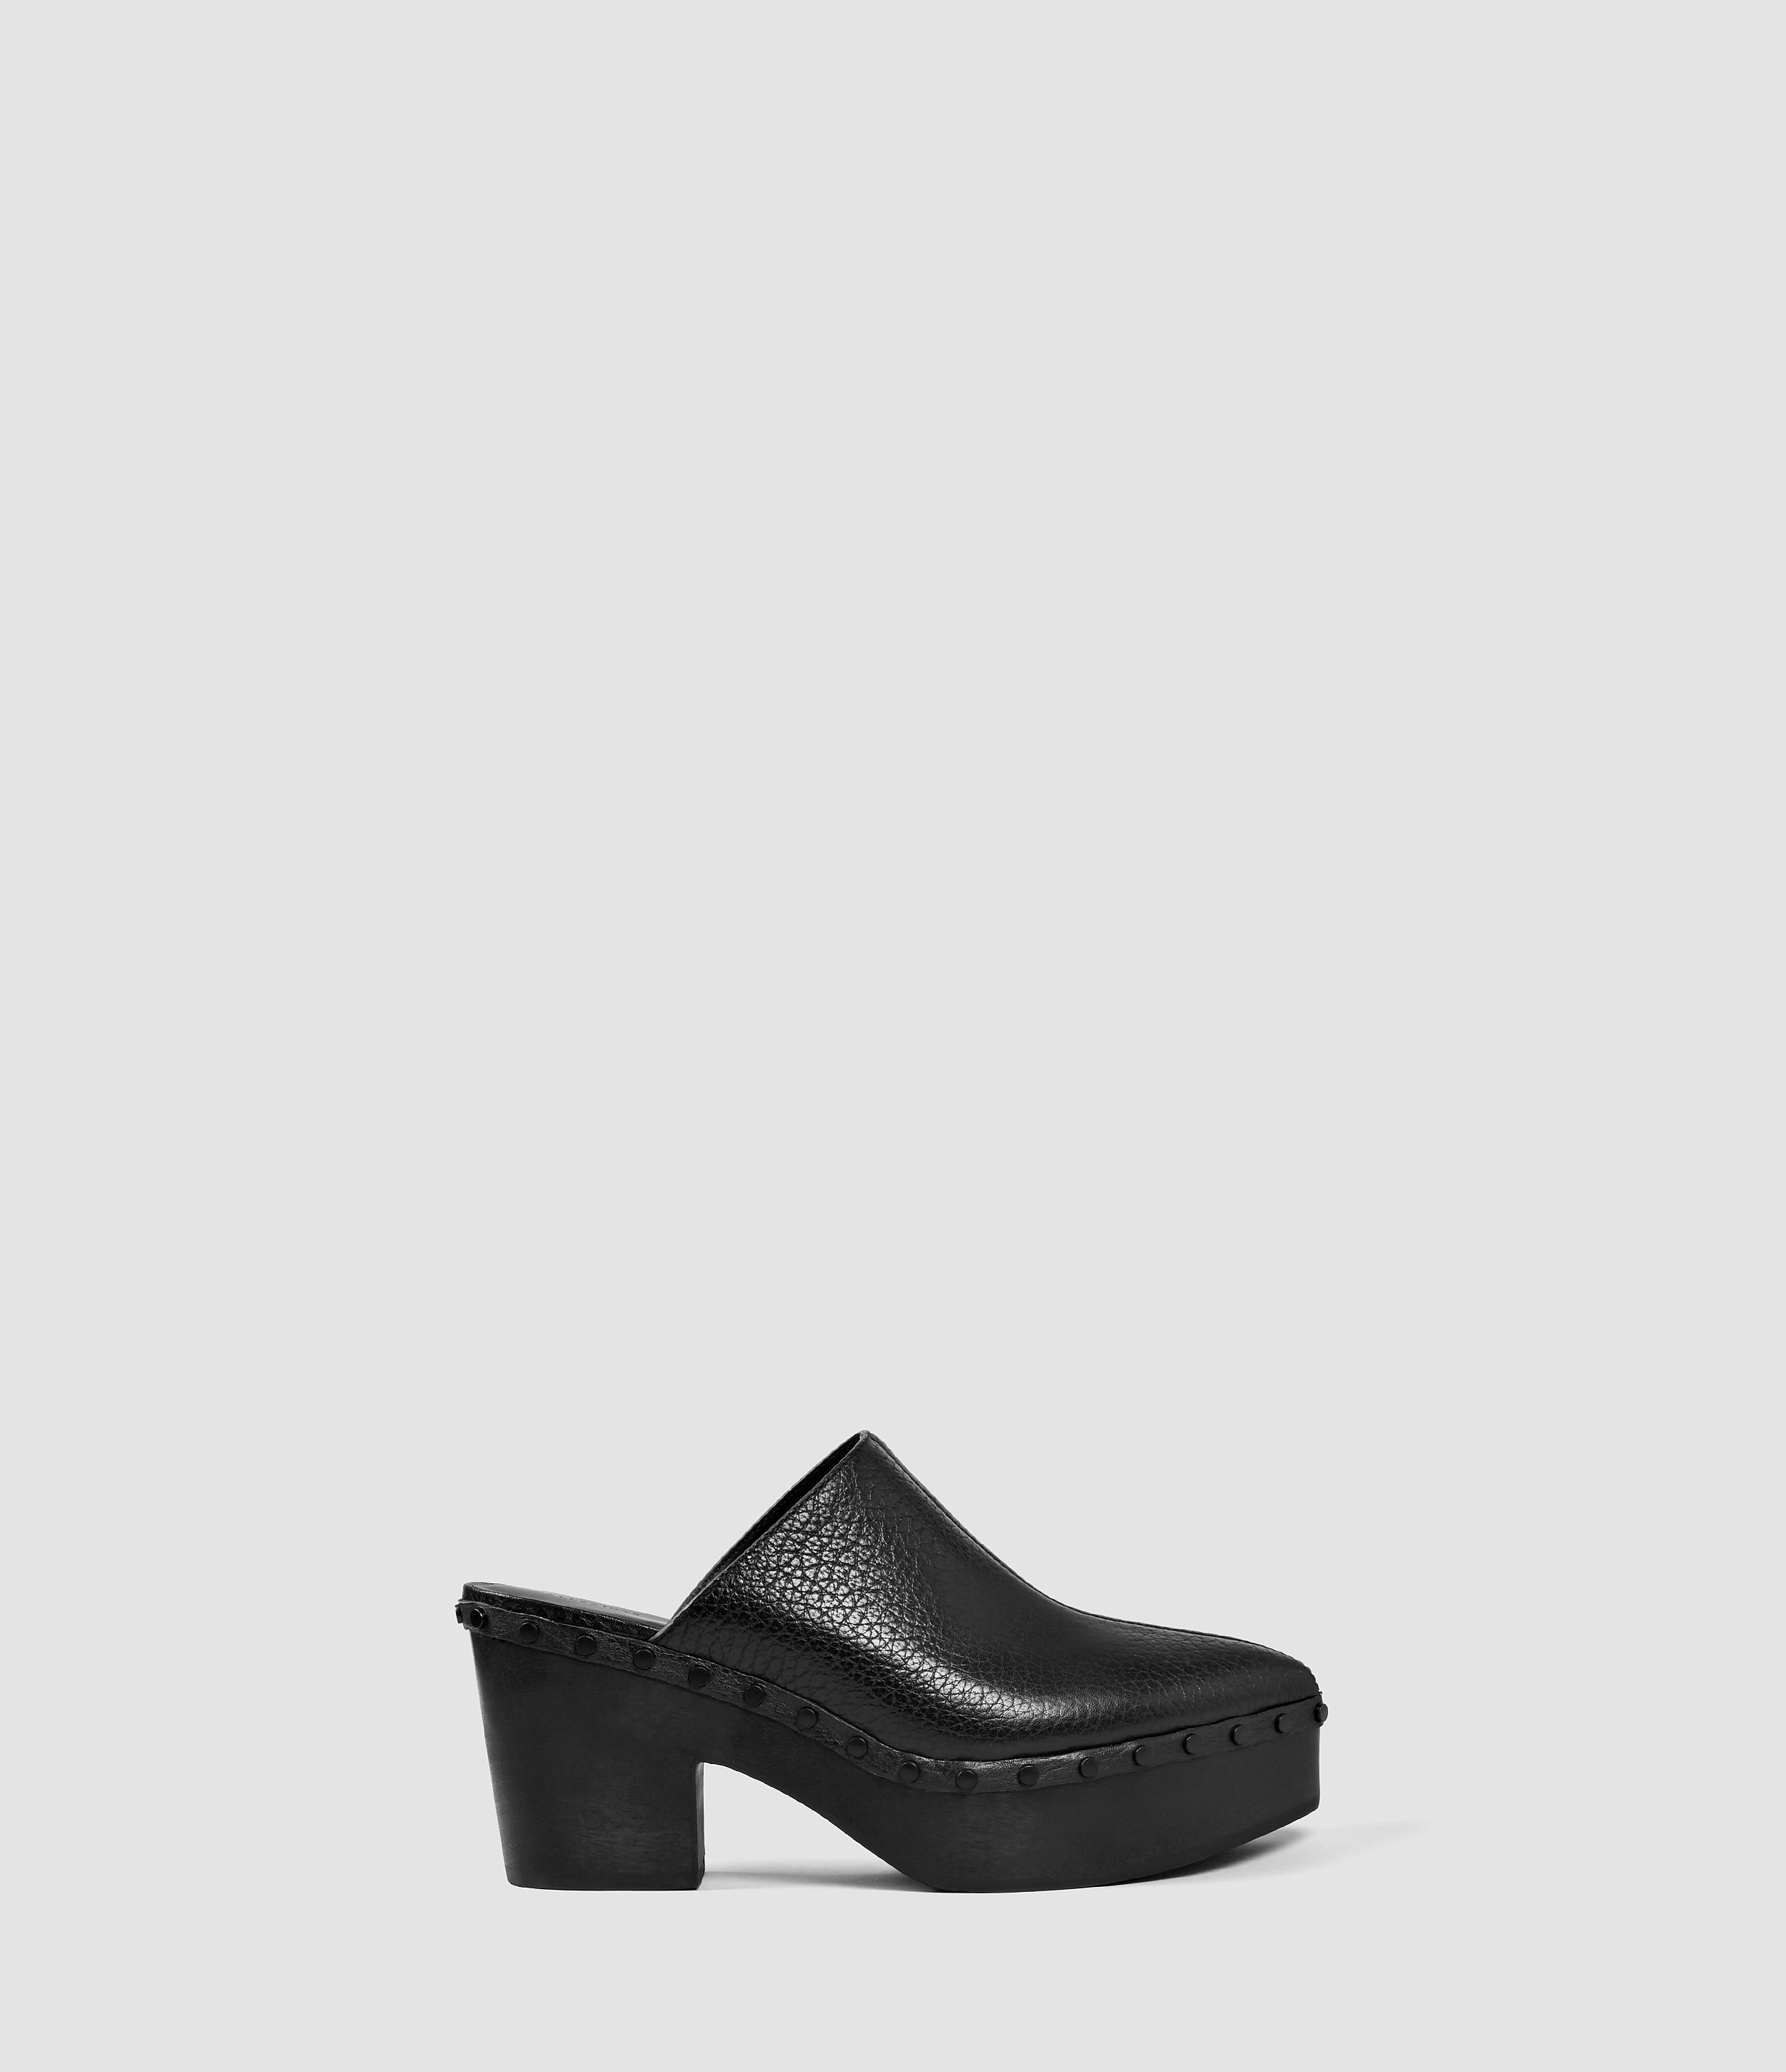 Lyst - AllSaints Gabes Slip On Shoe in Black